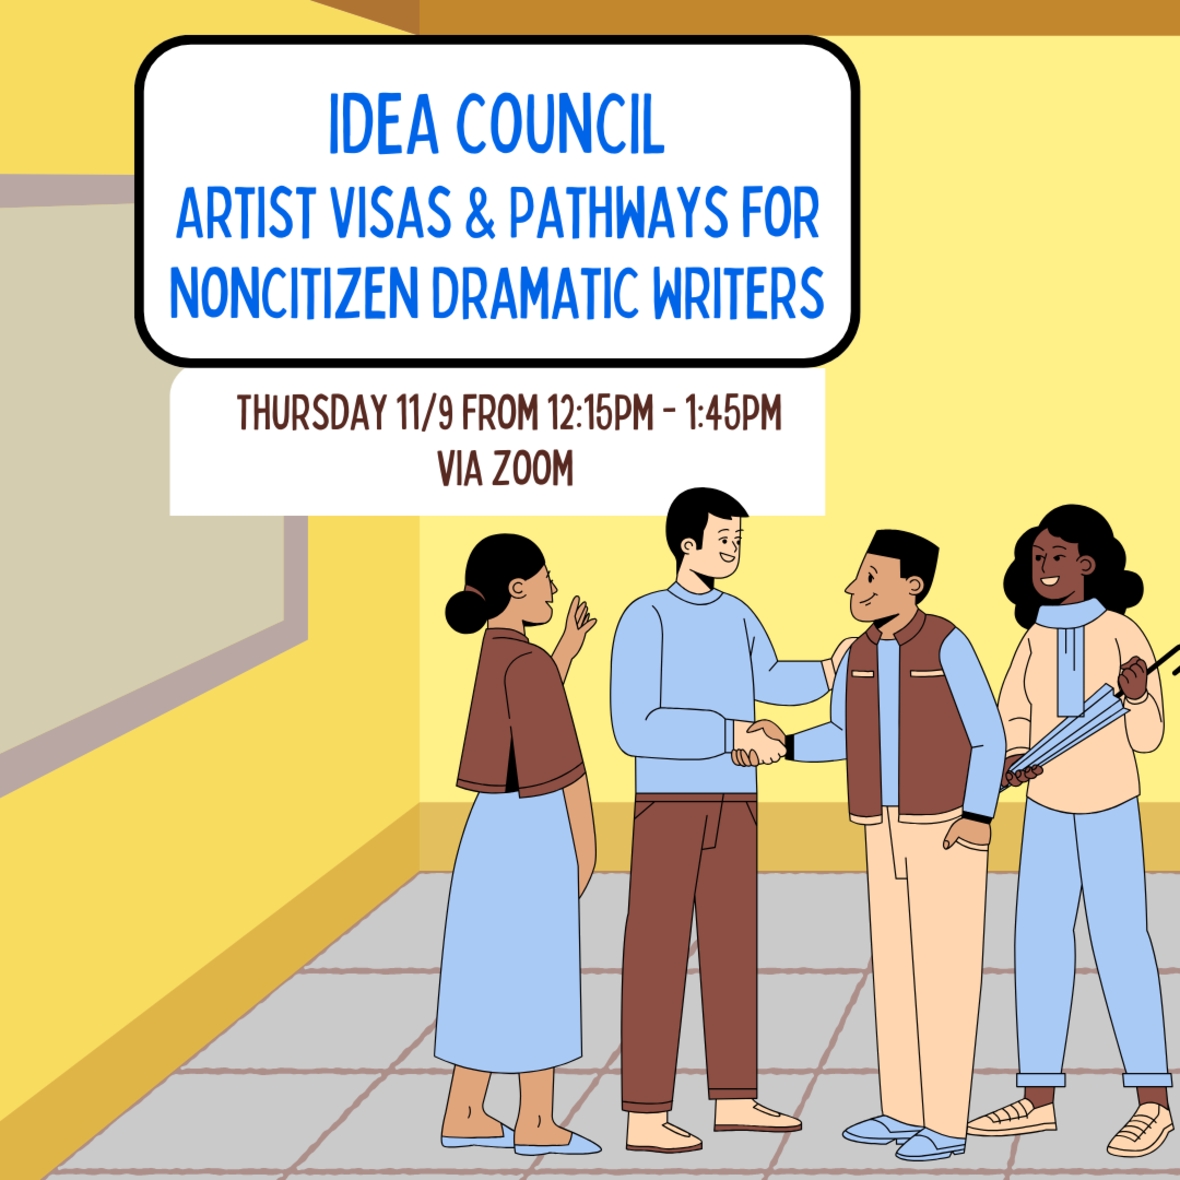 DDW IDEA Council: Artist Visas & Pathways for Noncitizen Dramatic Writers